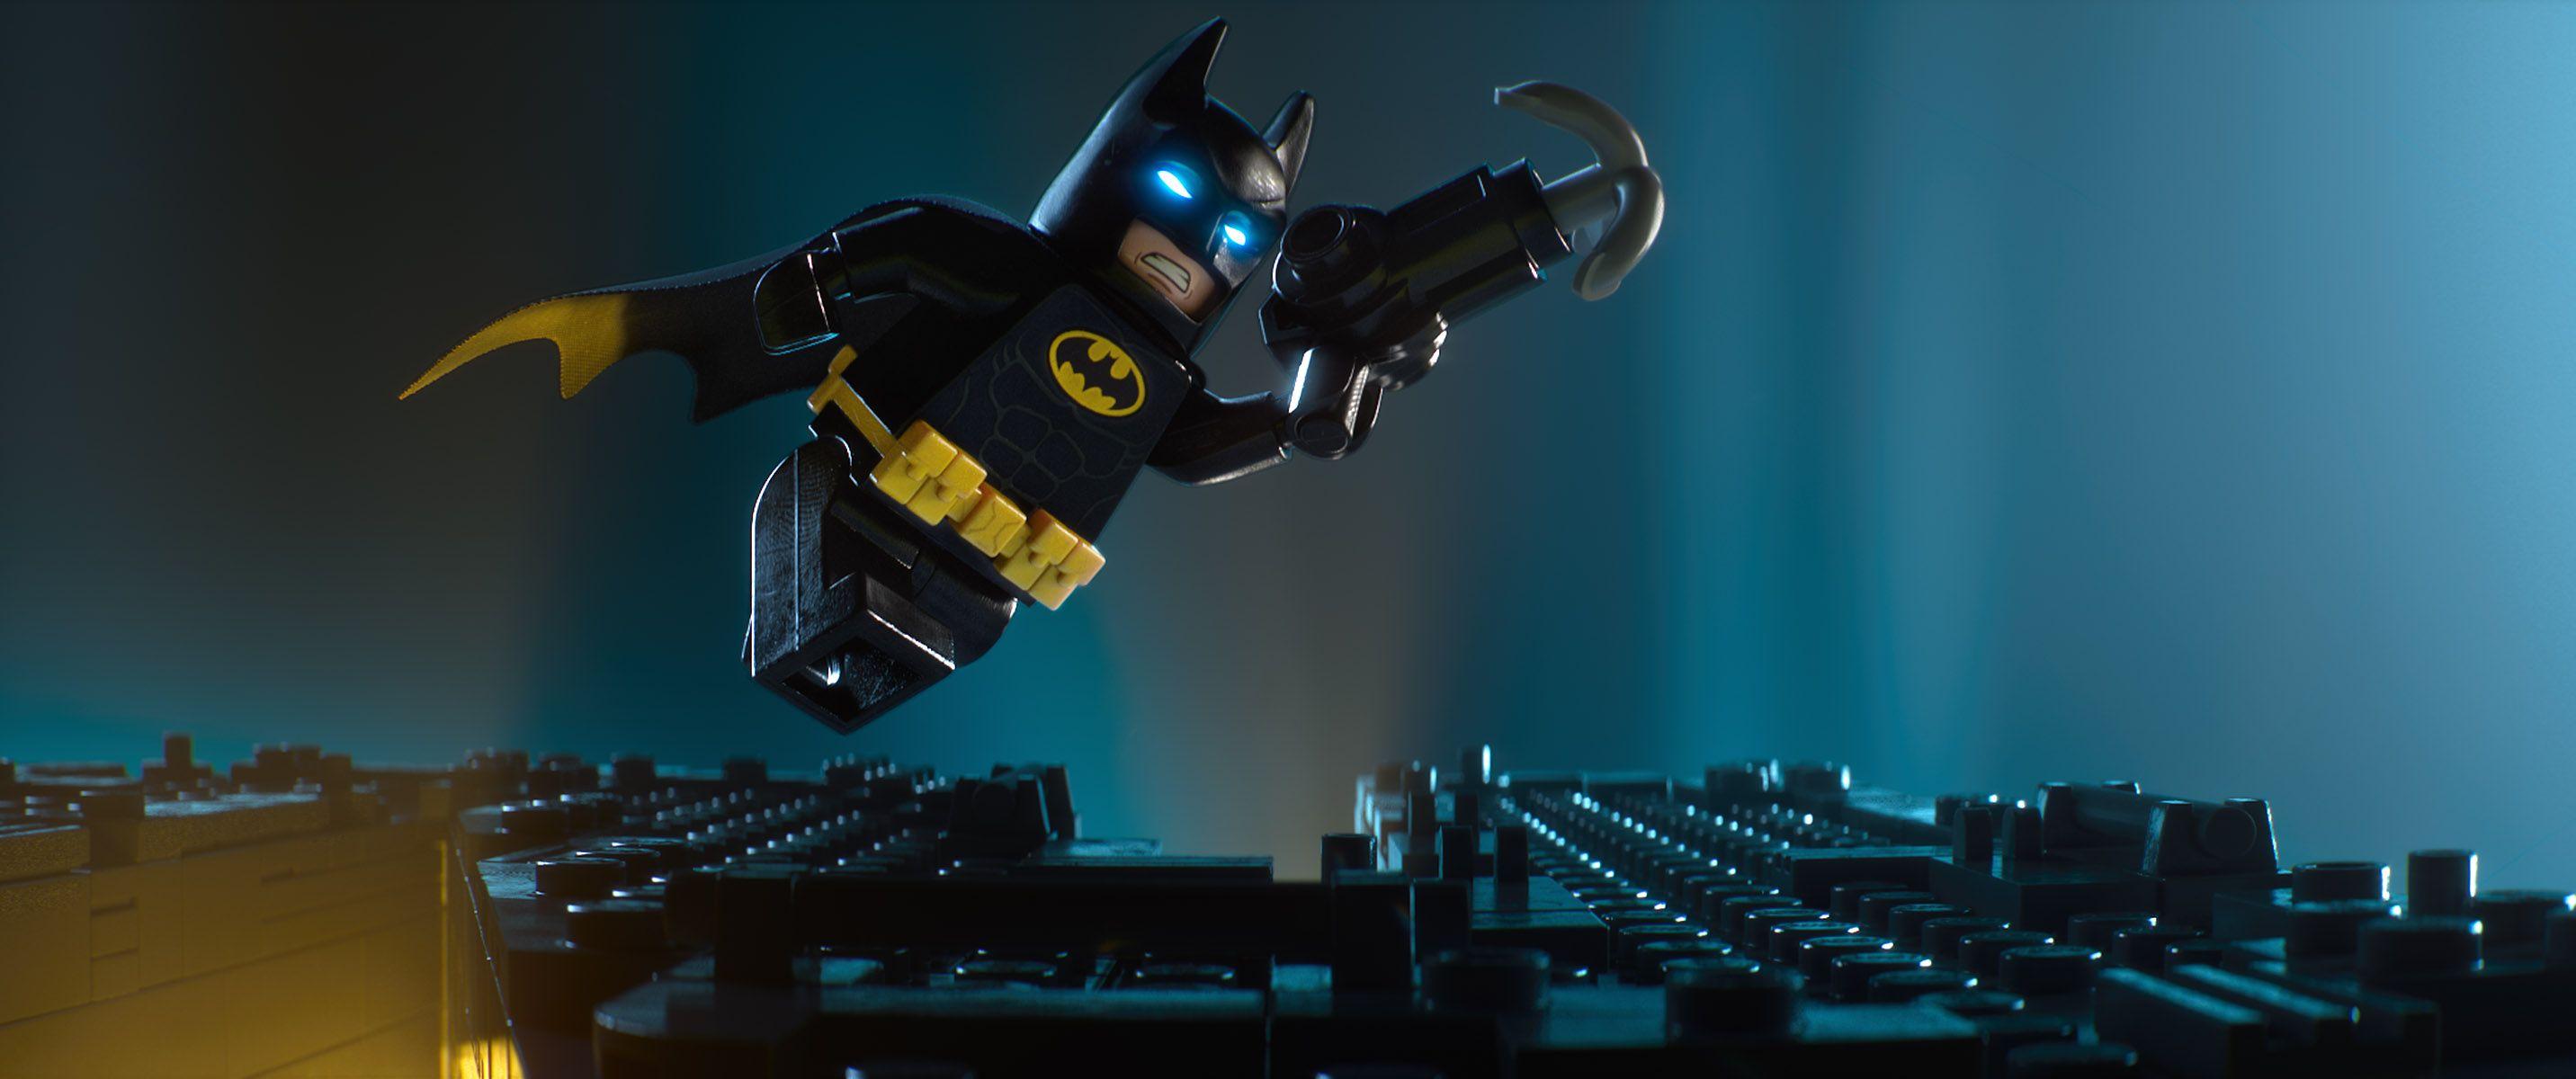 The Lego Batman Movie Fly wallpaper HD 2016 in The Lego Batman